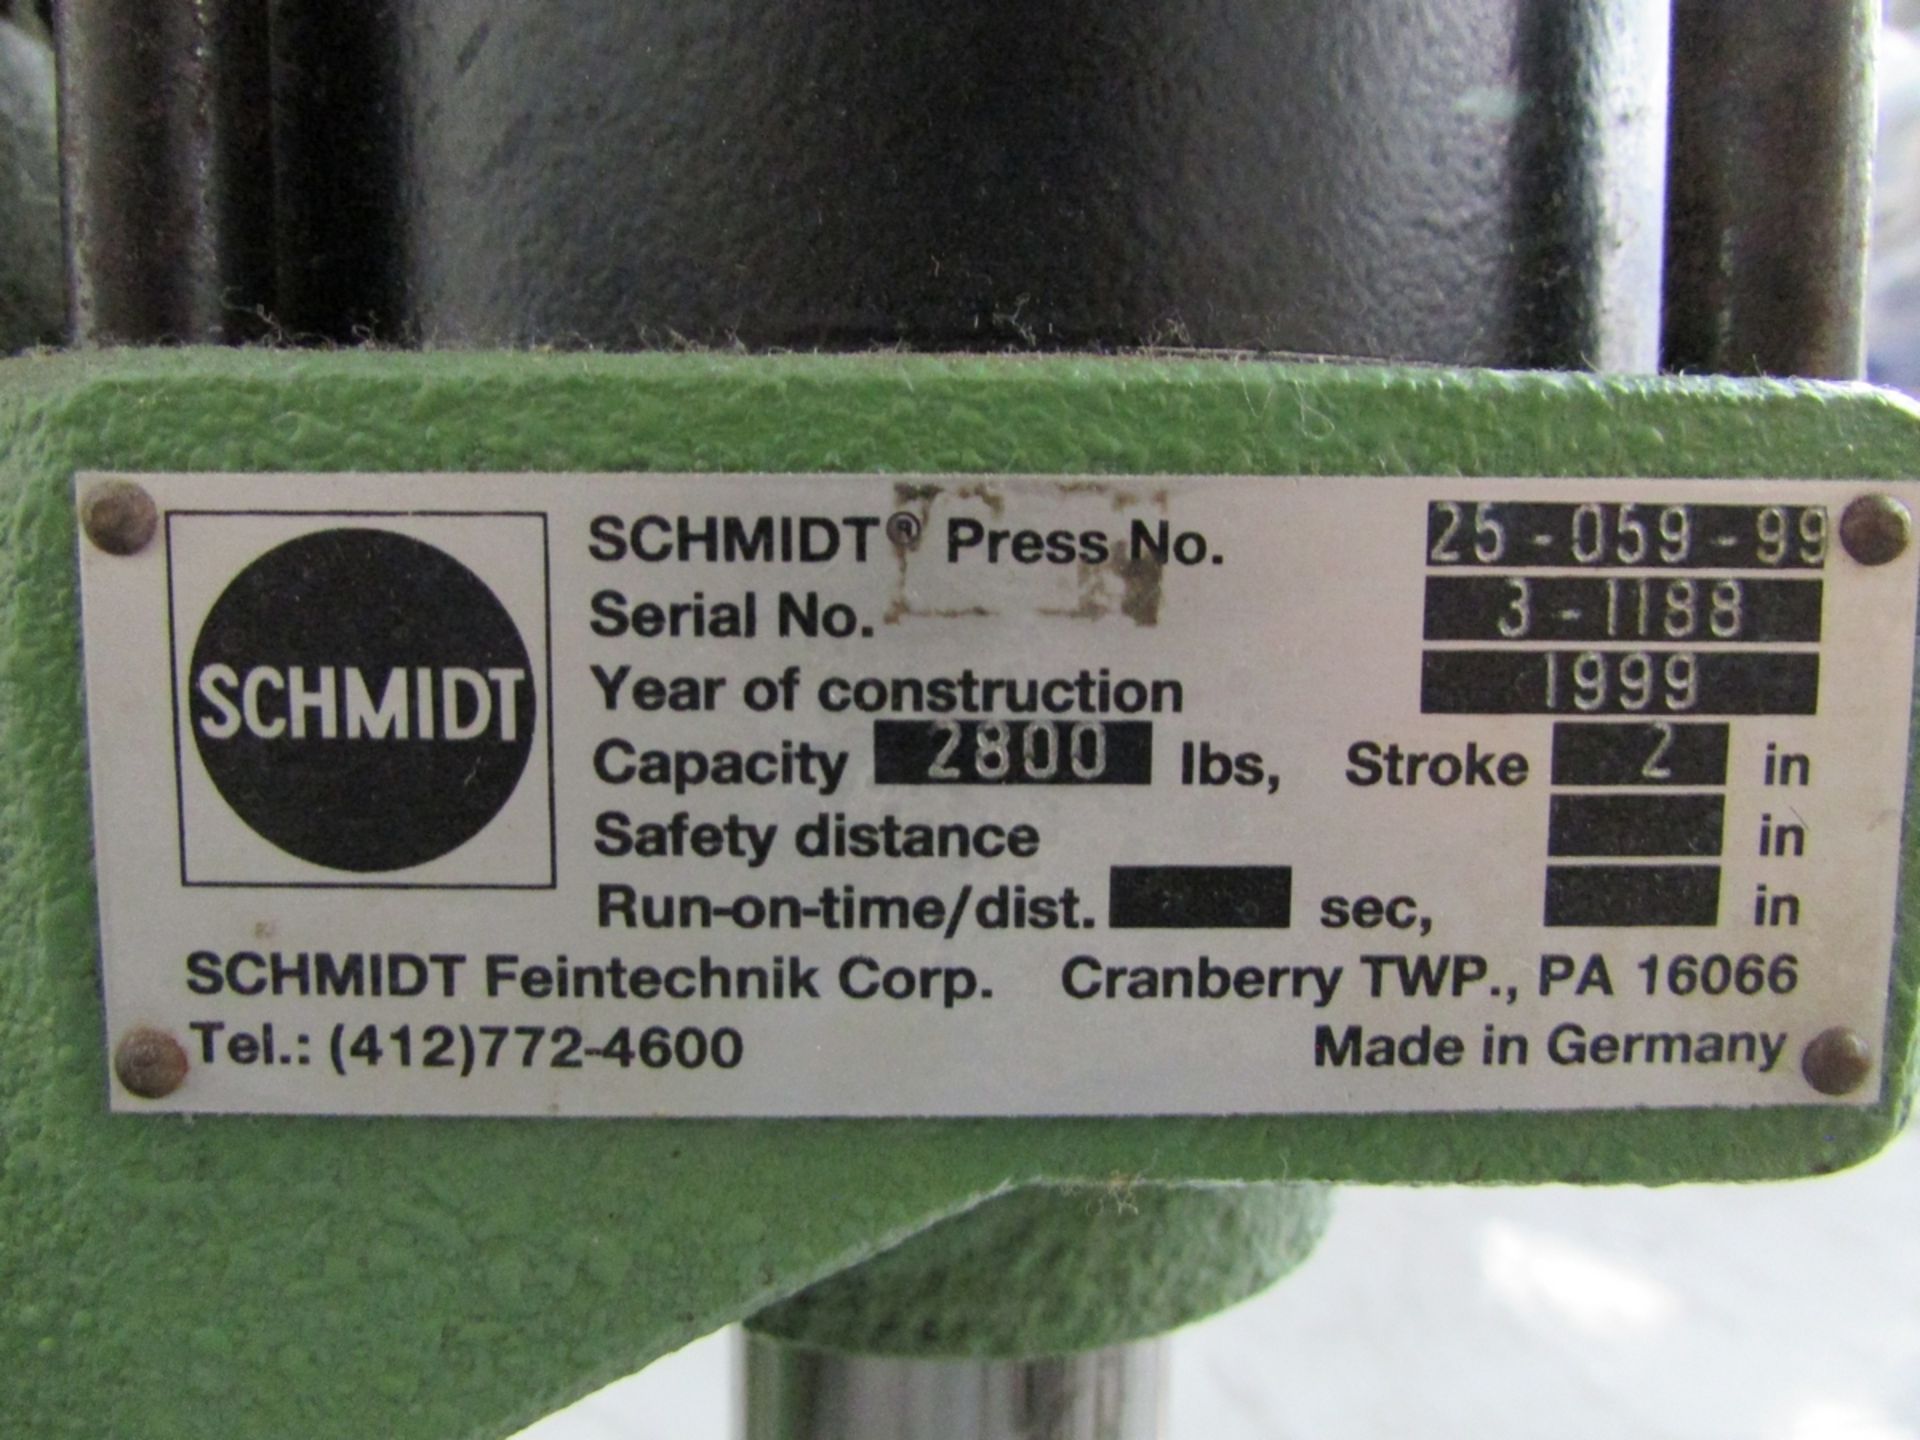 Schmidt 25-059-99 2800 Lb. Pneumatic Assembly Arbor Press (1999) - Image 18 of 18